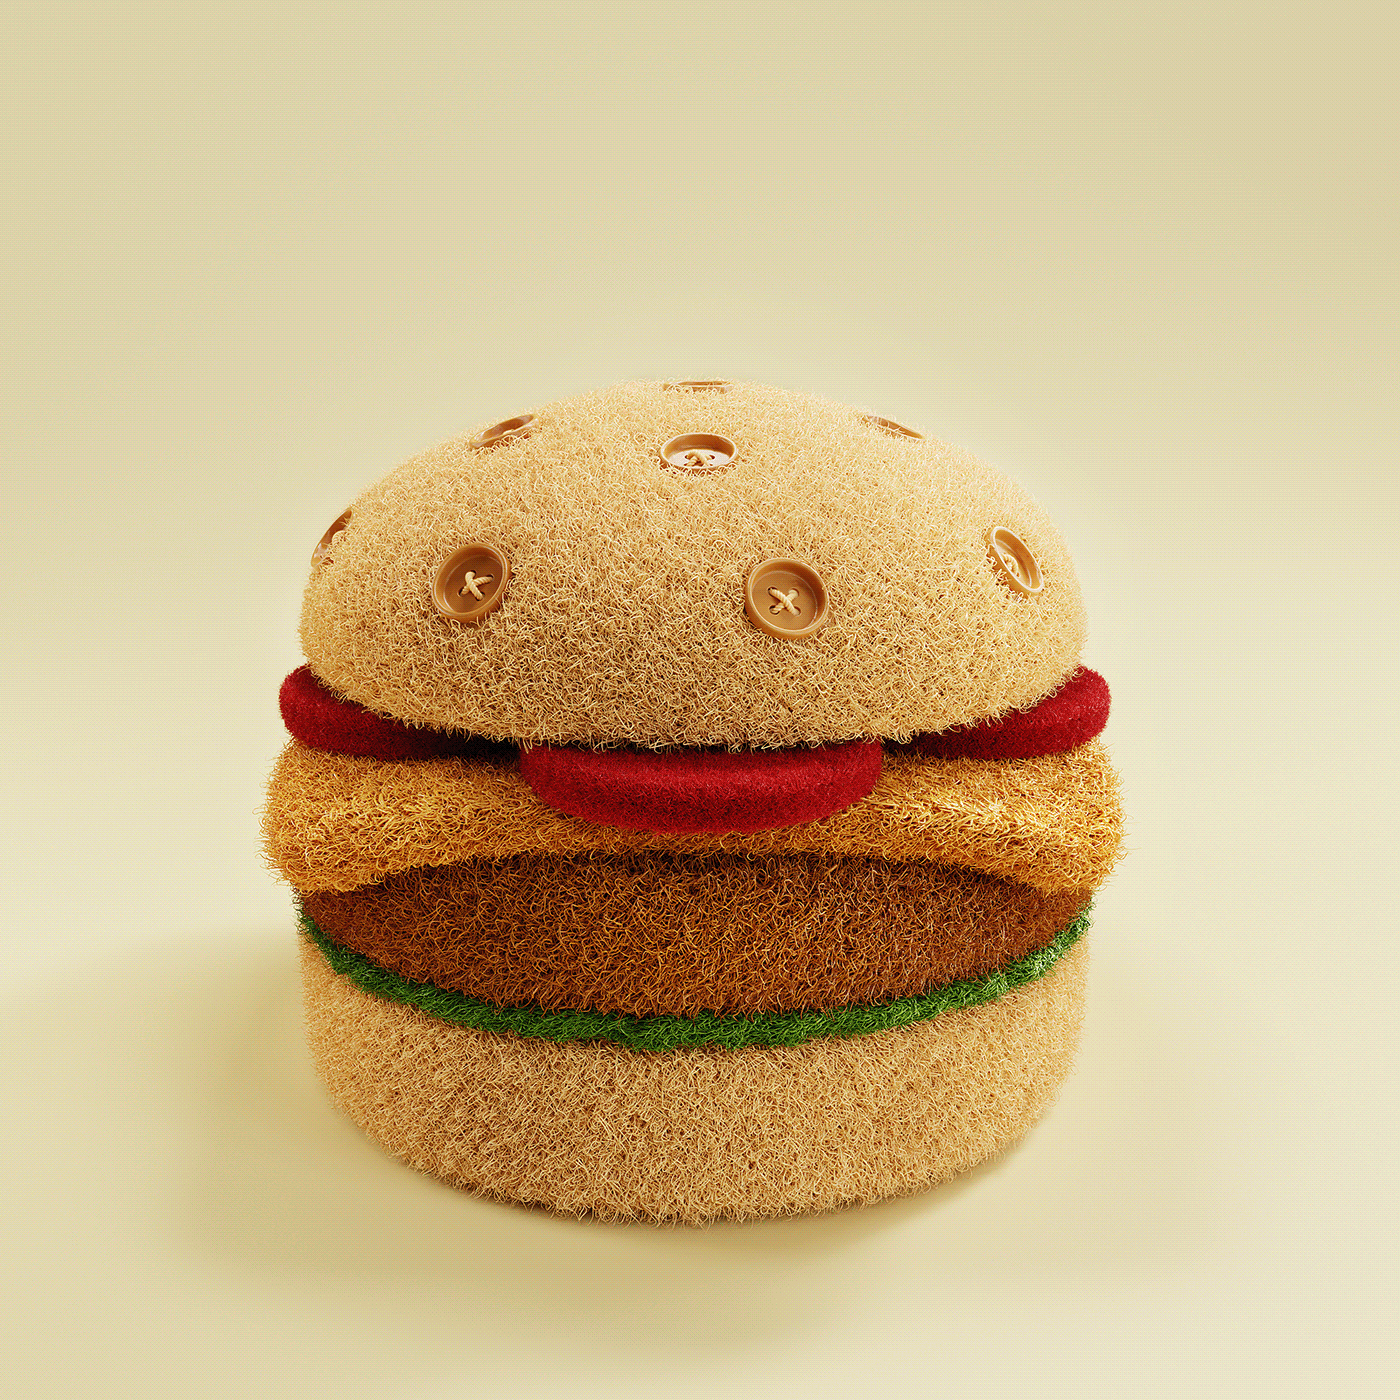 3D 3d food 3d burger blender 3d blender CGI